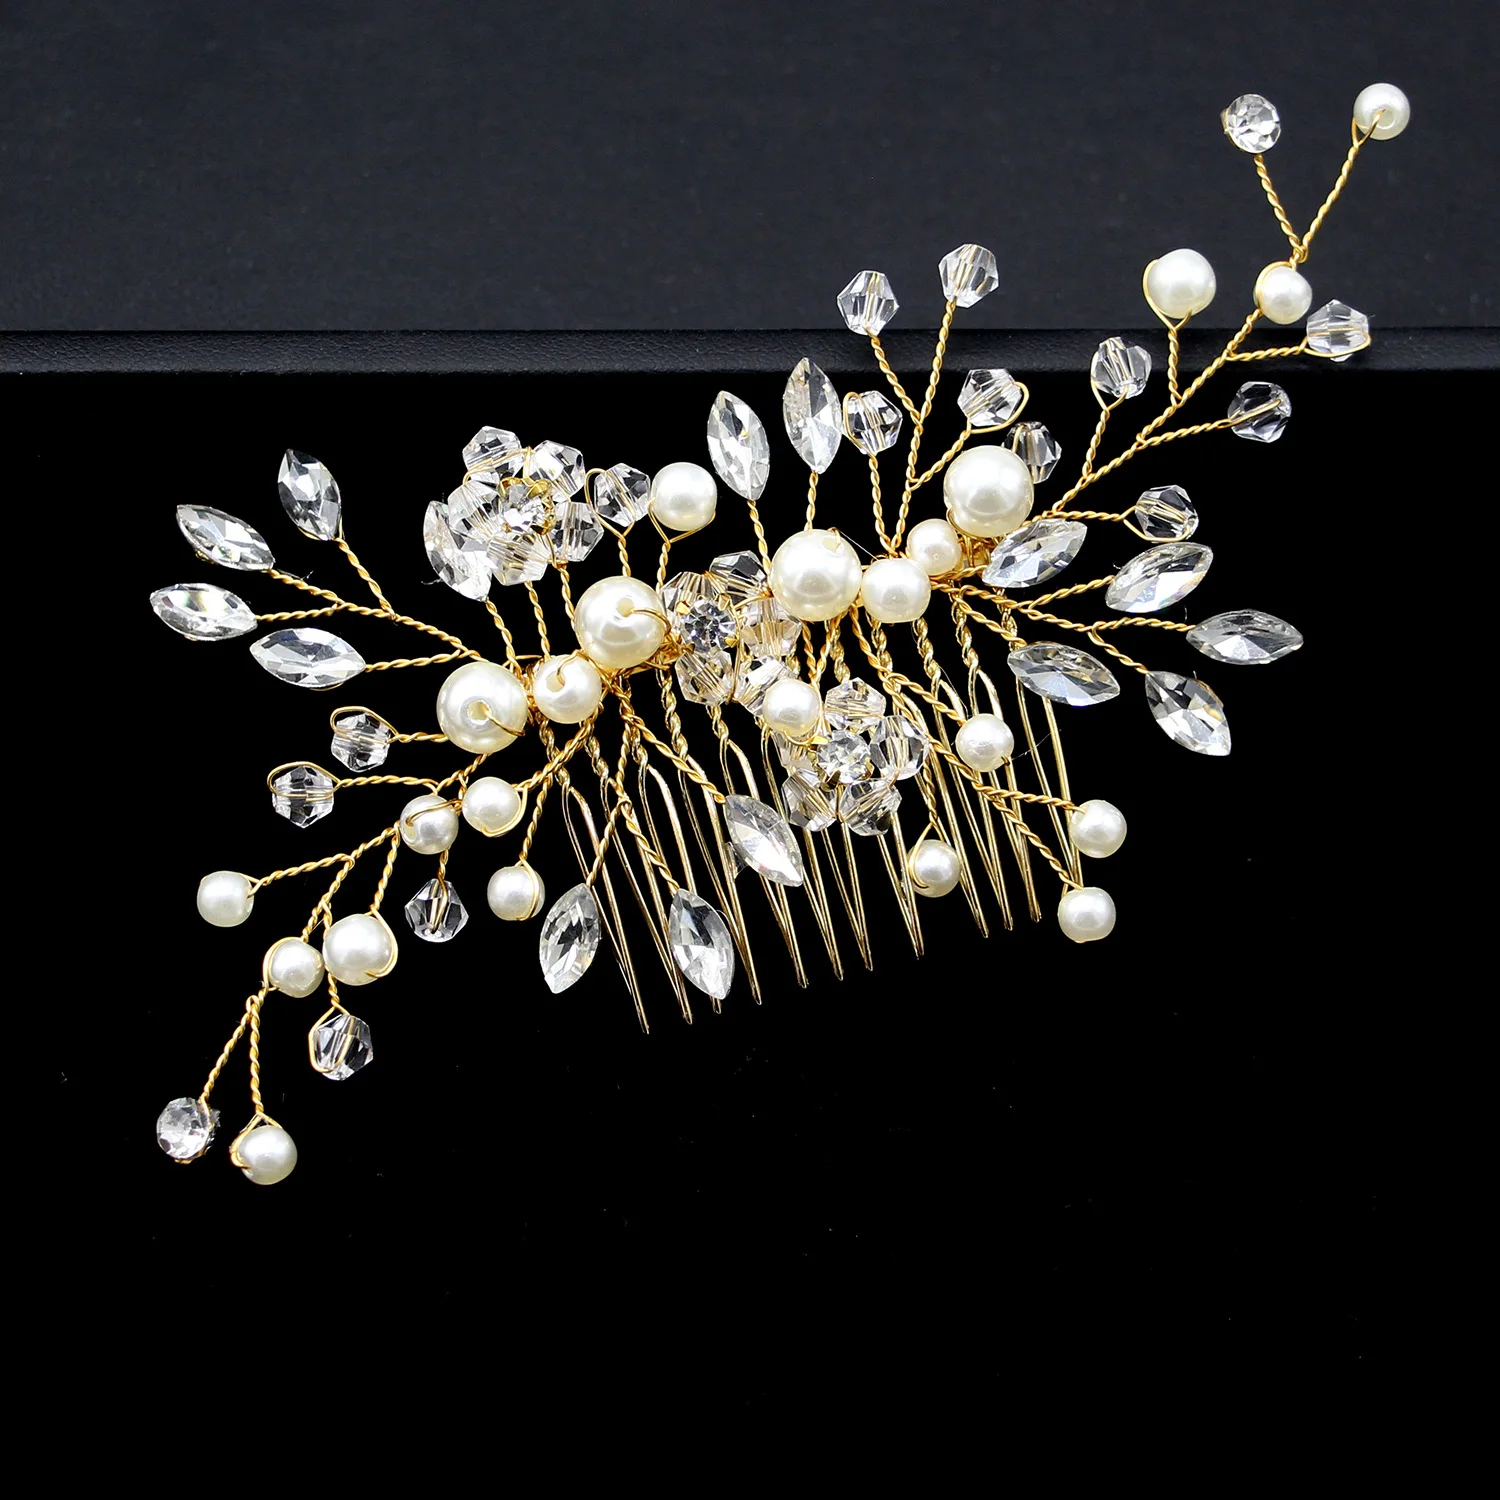 Bridal Hair Comb Clip Crystal Rhinestone Pearl Wedding Hair Jewelry Accessories for Bride Bridesmaid Handmade Headpiece Ornament